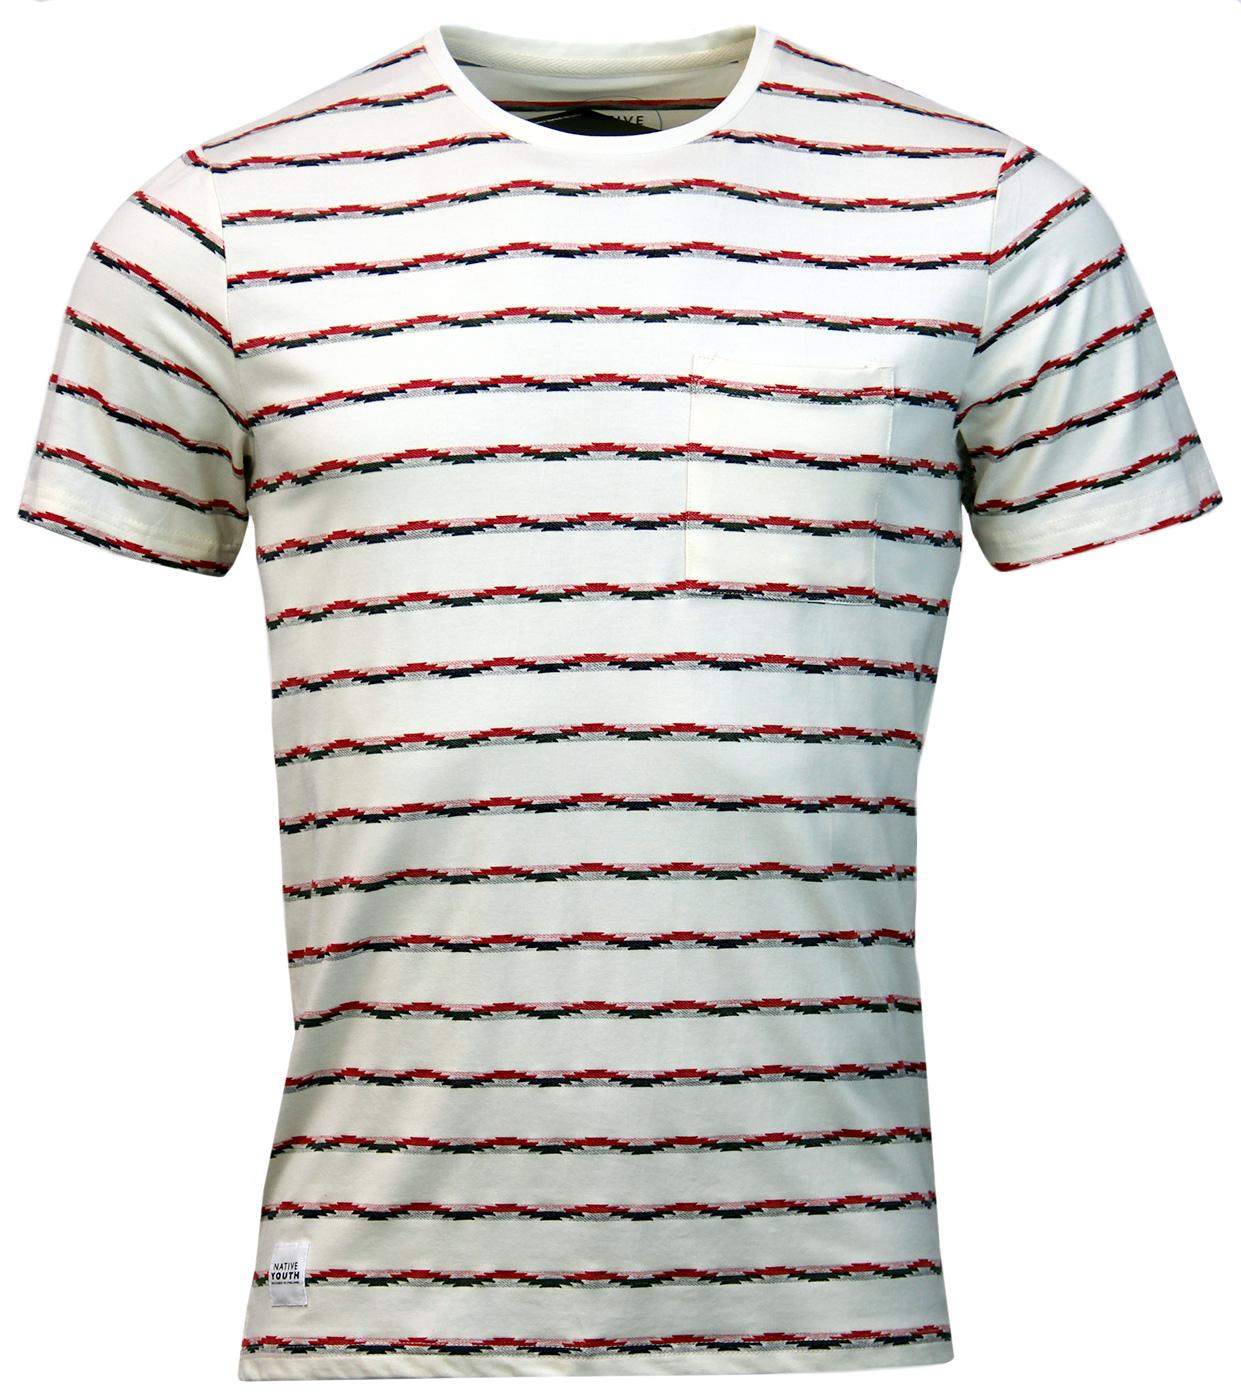 NATIVE YOUTH Retro Indie Jacquard Stripe T-Shirt in Cream